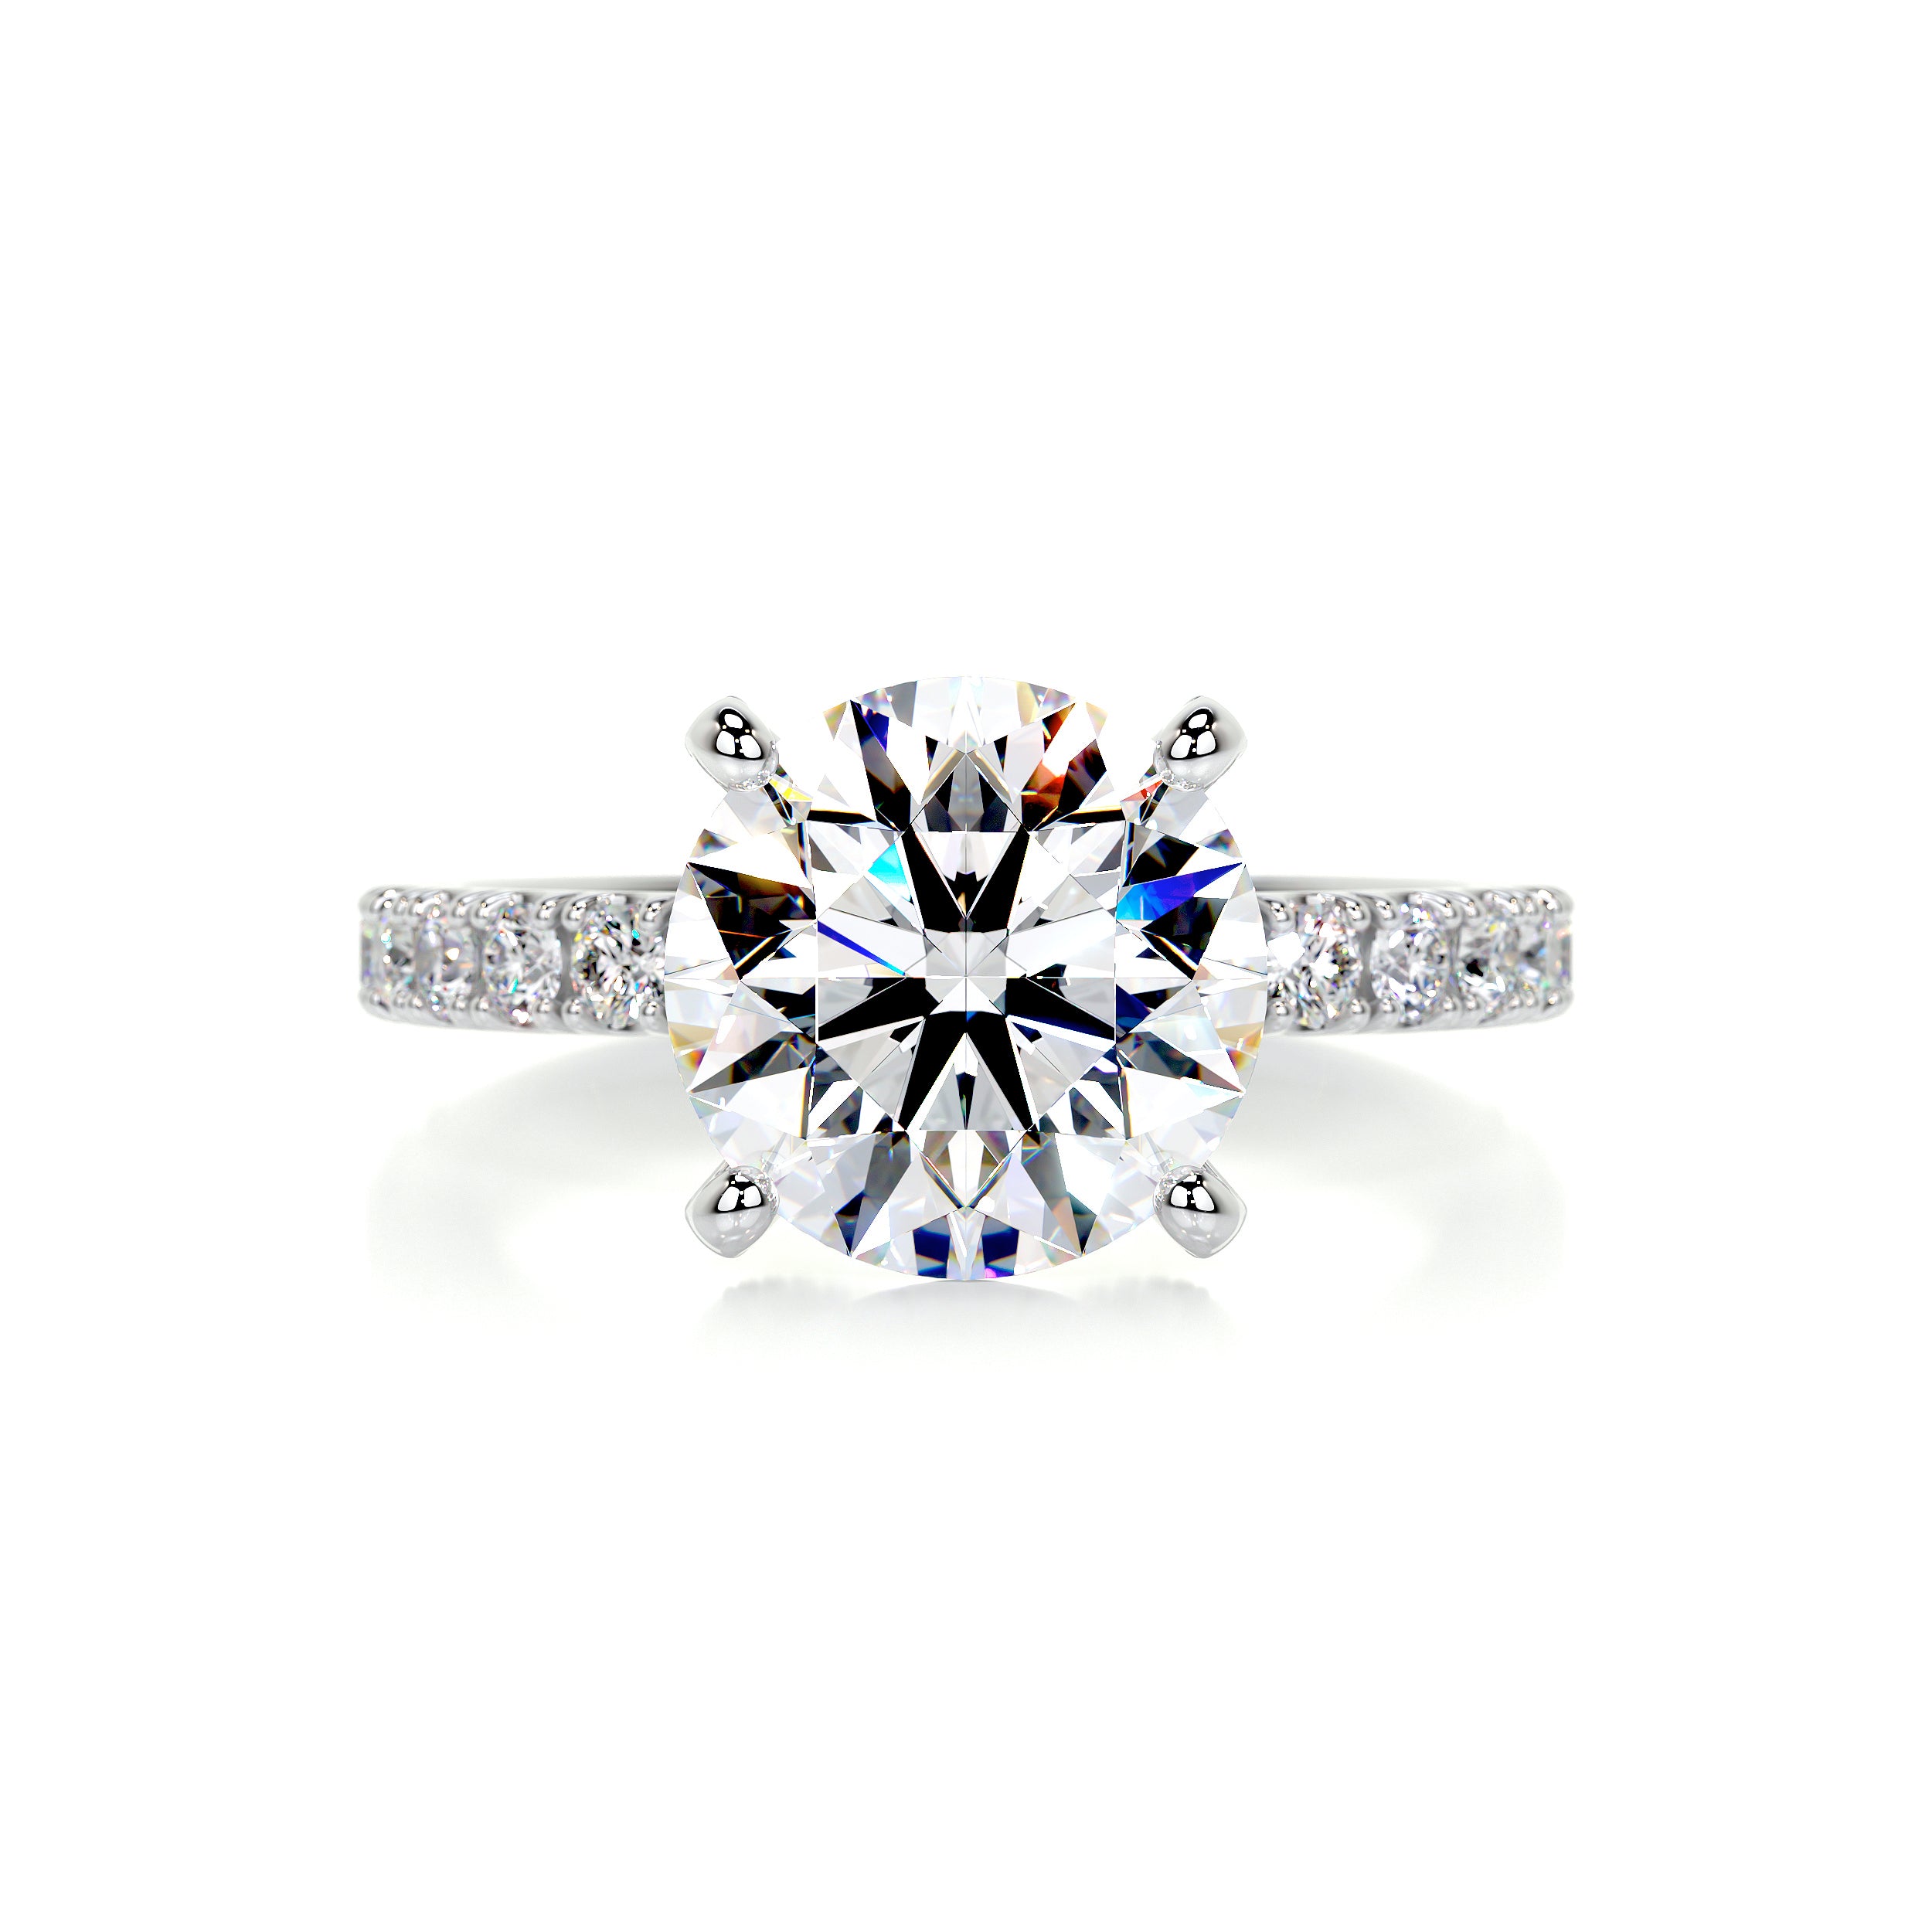 Alison Moissanite & Diamonds Ring   (3.75 Carat) -18K White Gold